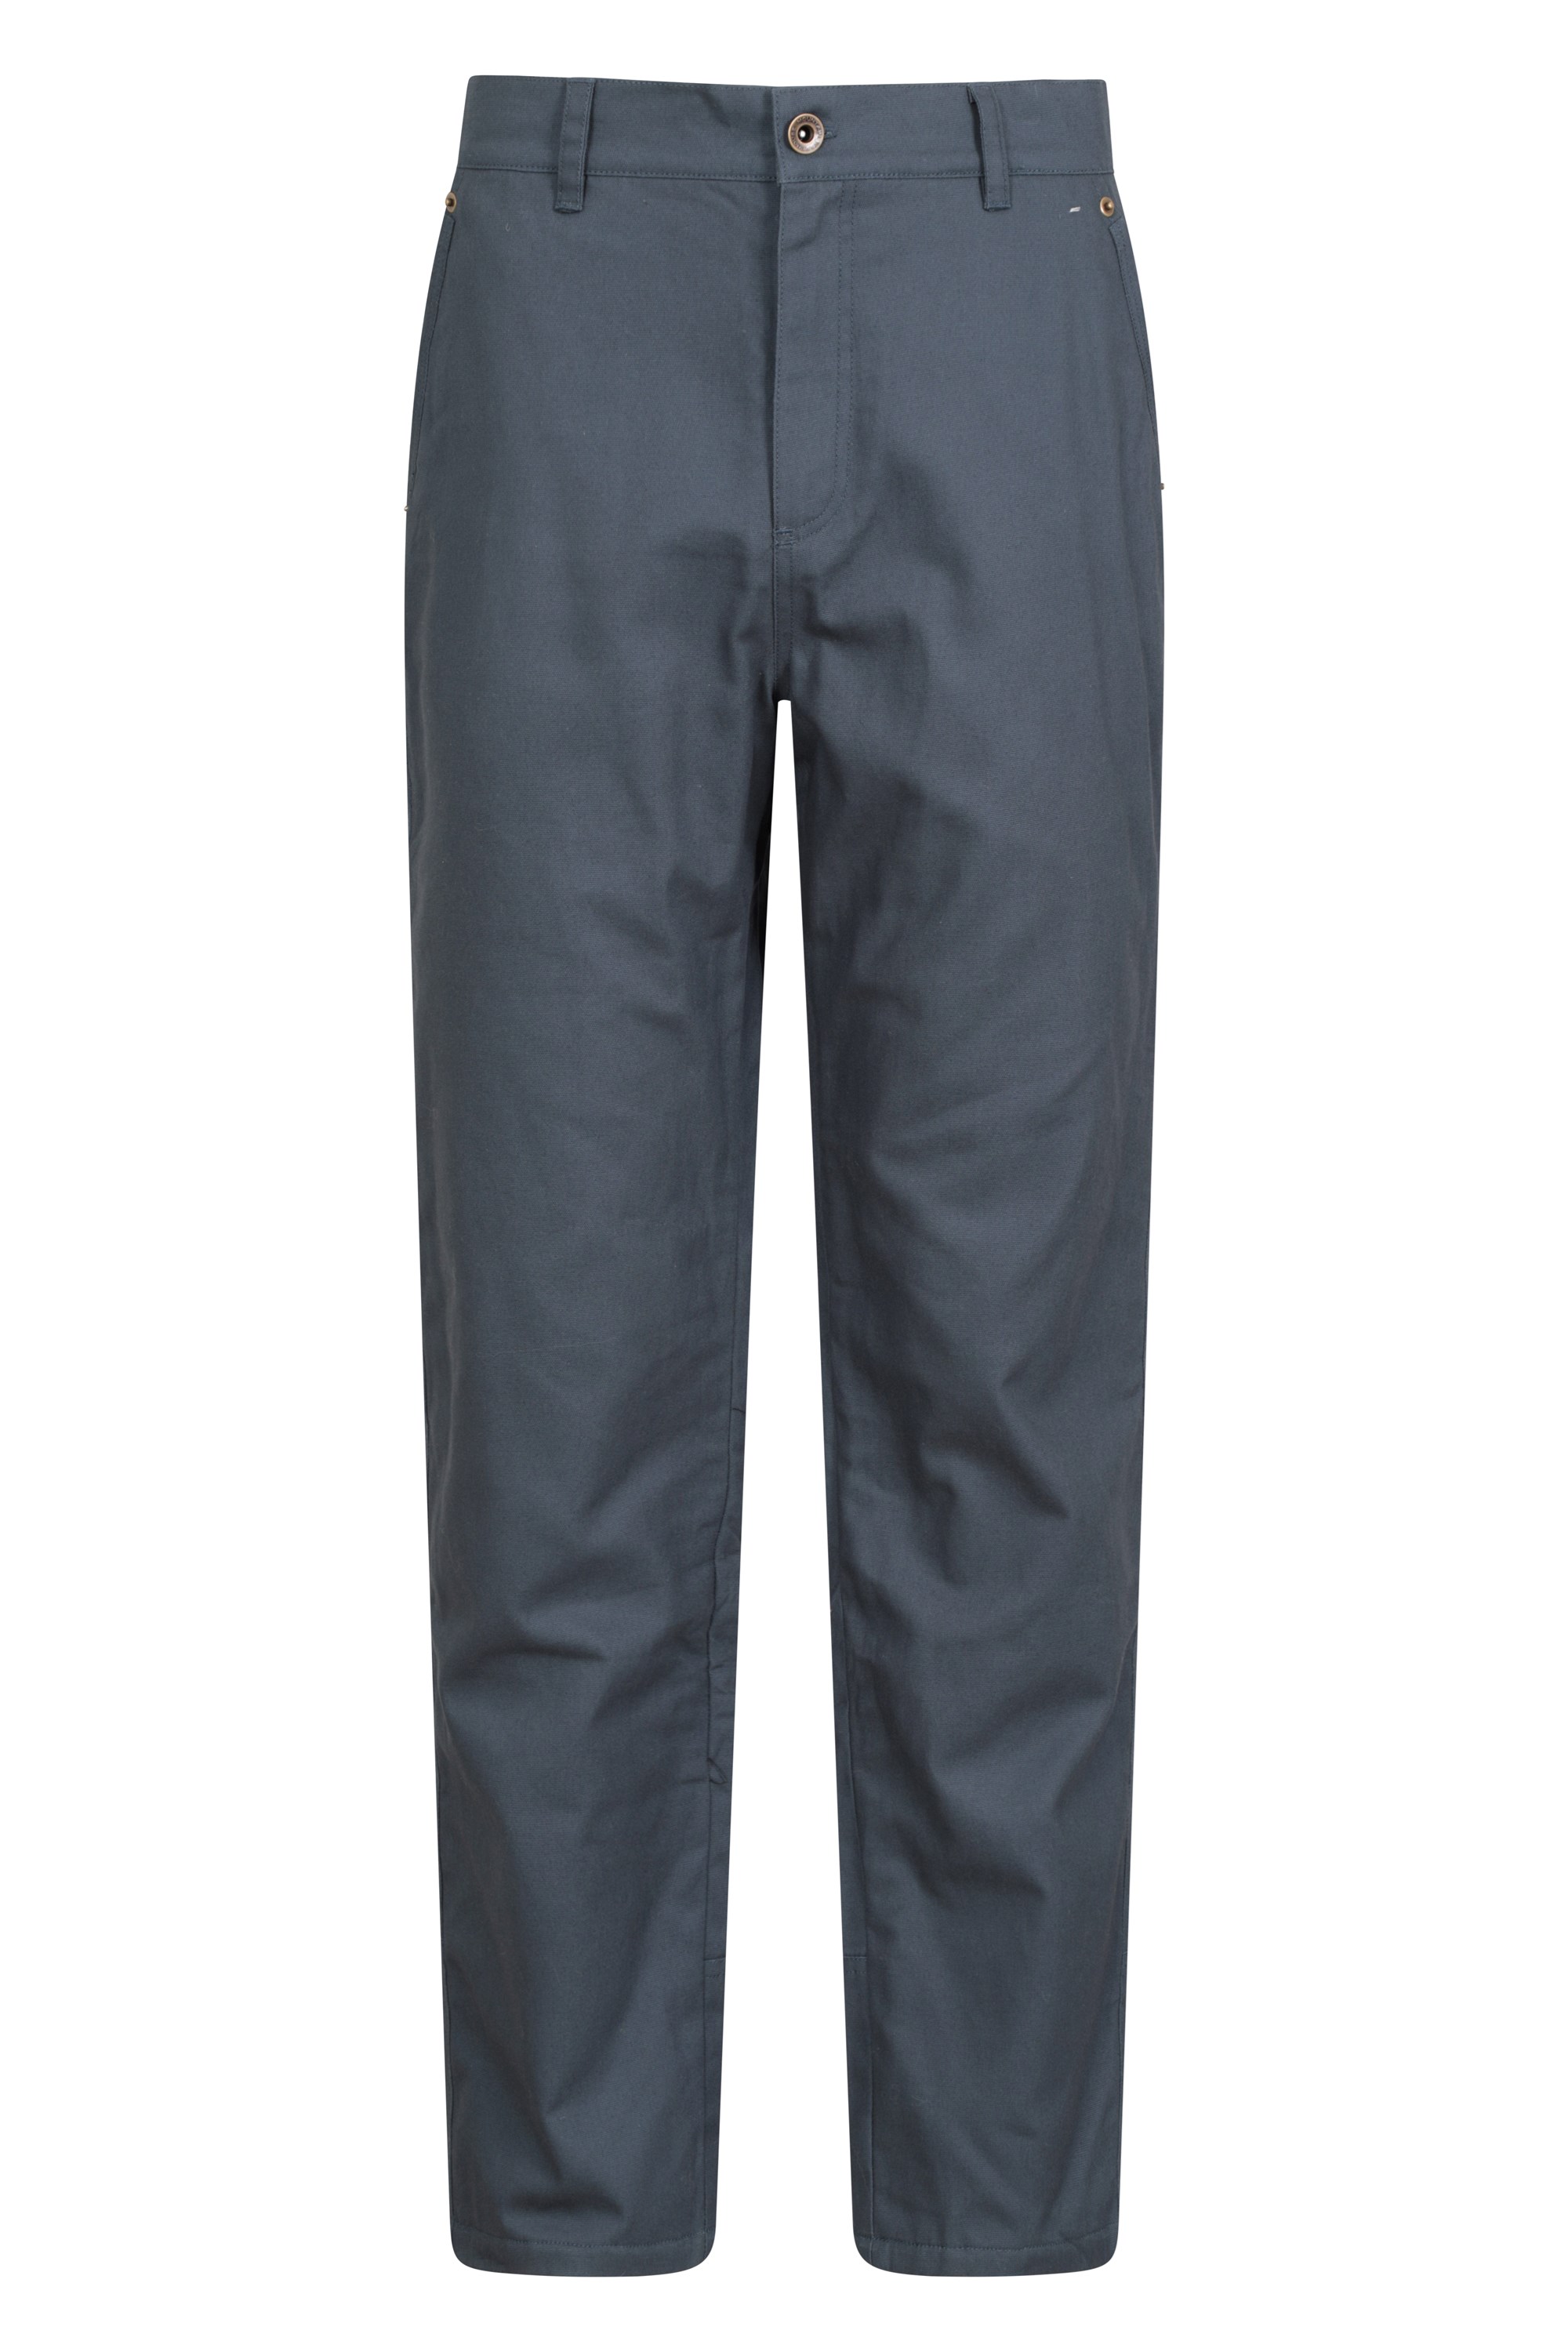 Combat Men Winter Warm Casual Fleece Lined Camo Cargo Pants Work Trousers  Pants | eBay